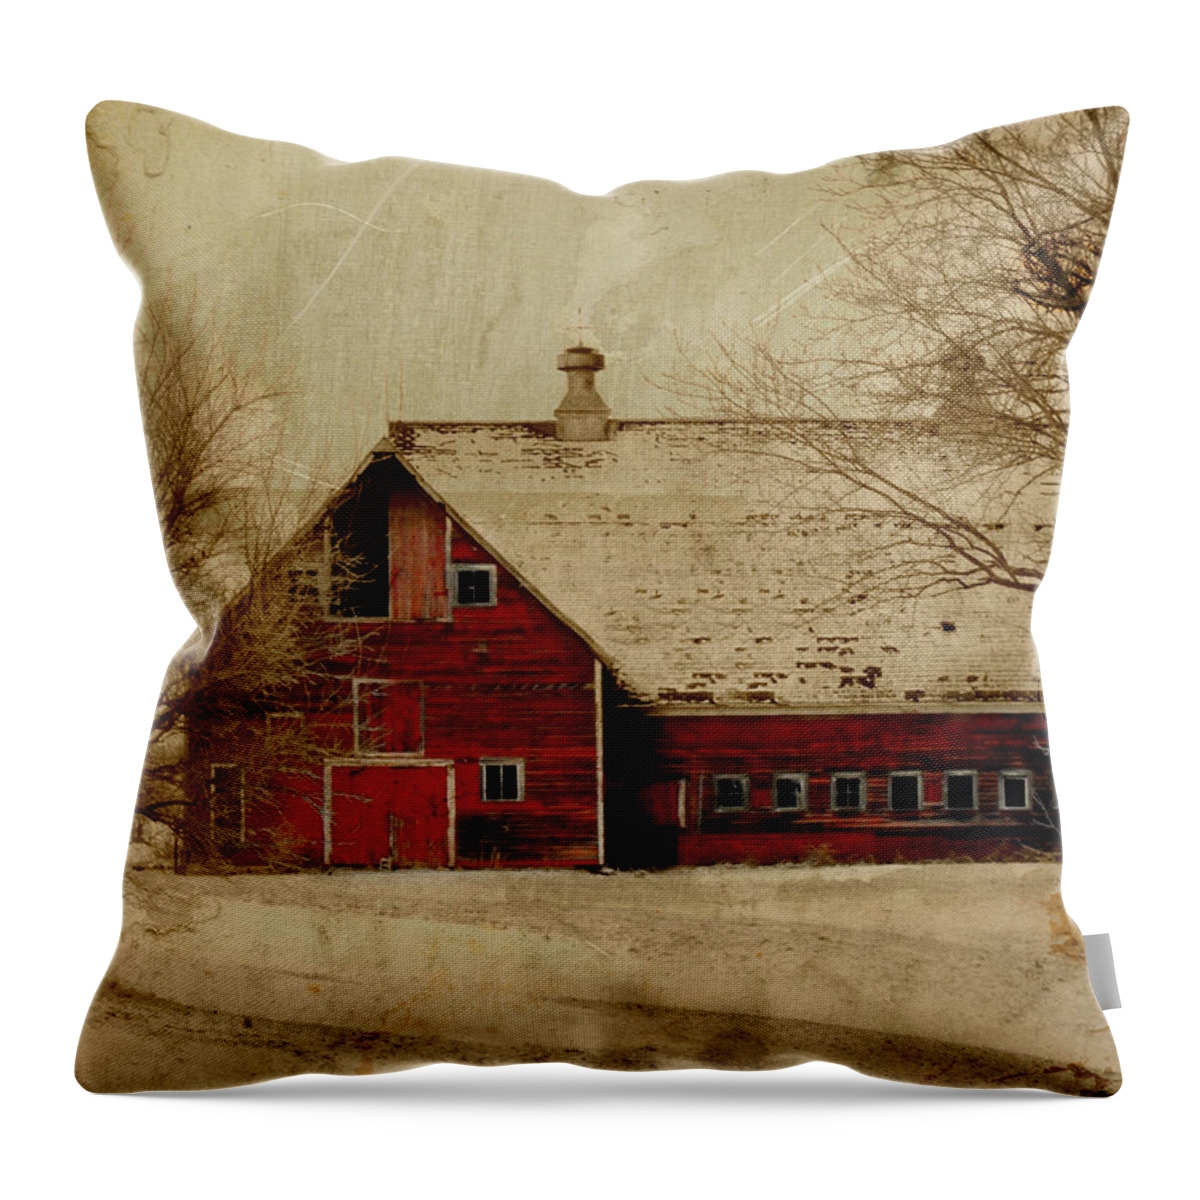 Red Throw Pillow featuring the digital art South Dakota Barn by Julie Hamilton